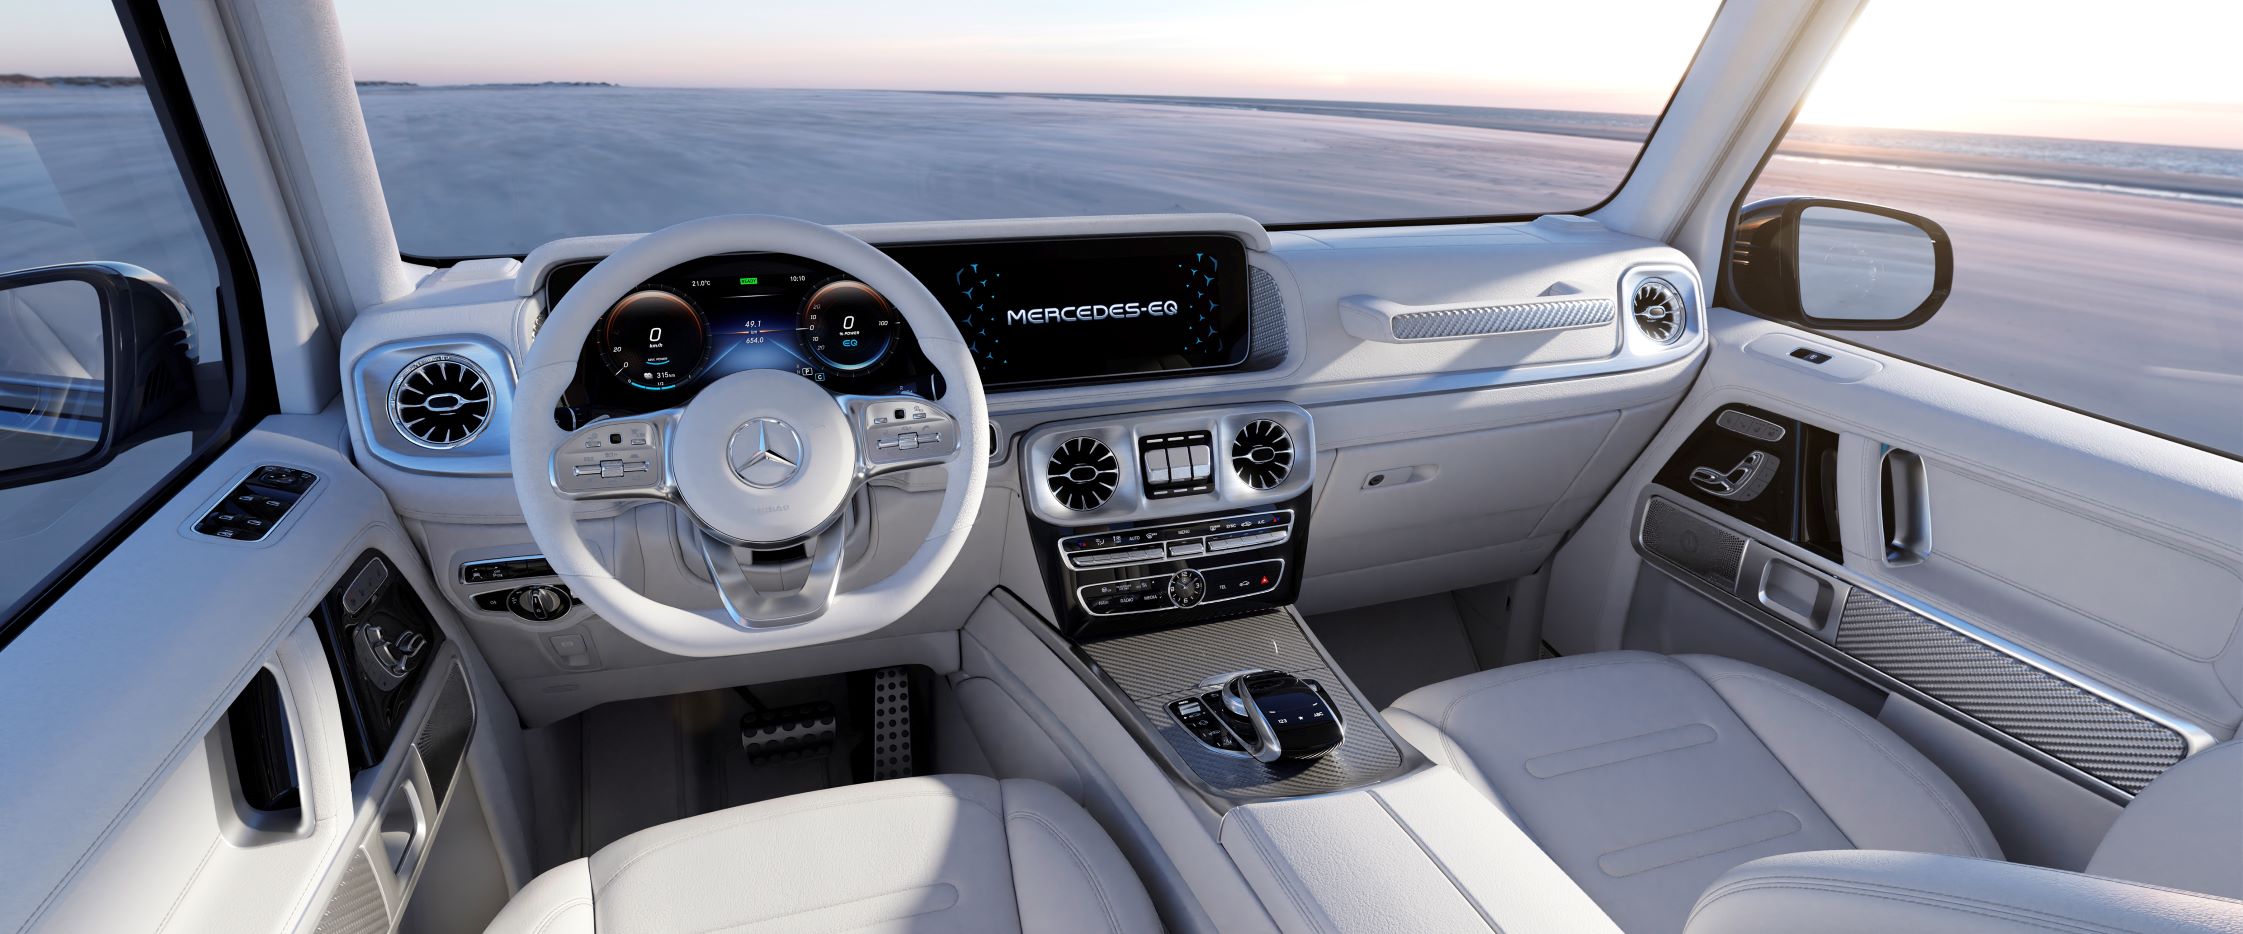 Interior of the Mercedes-EQG